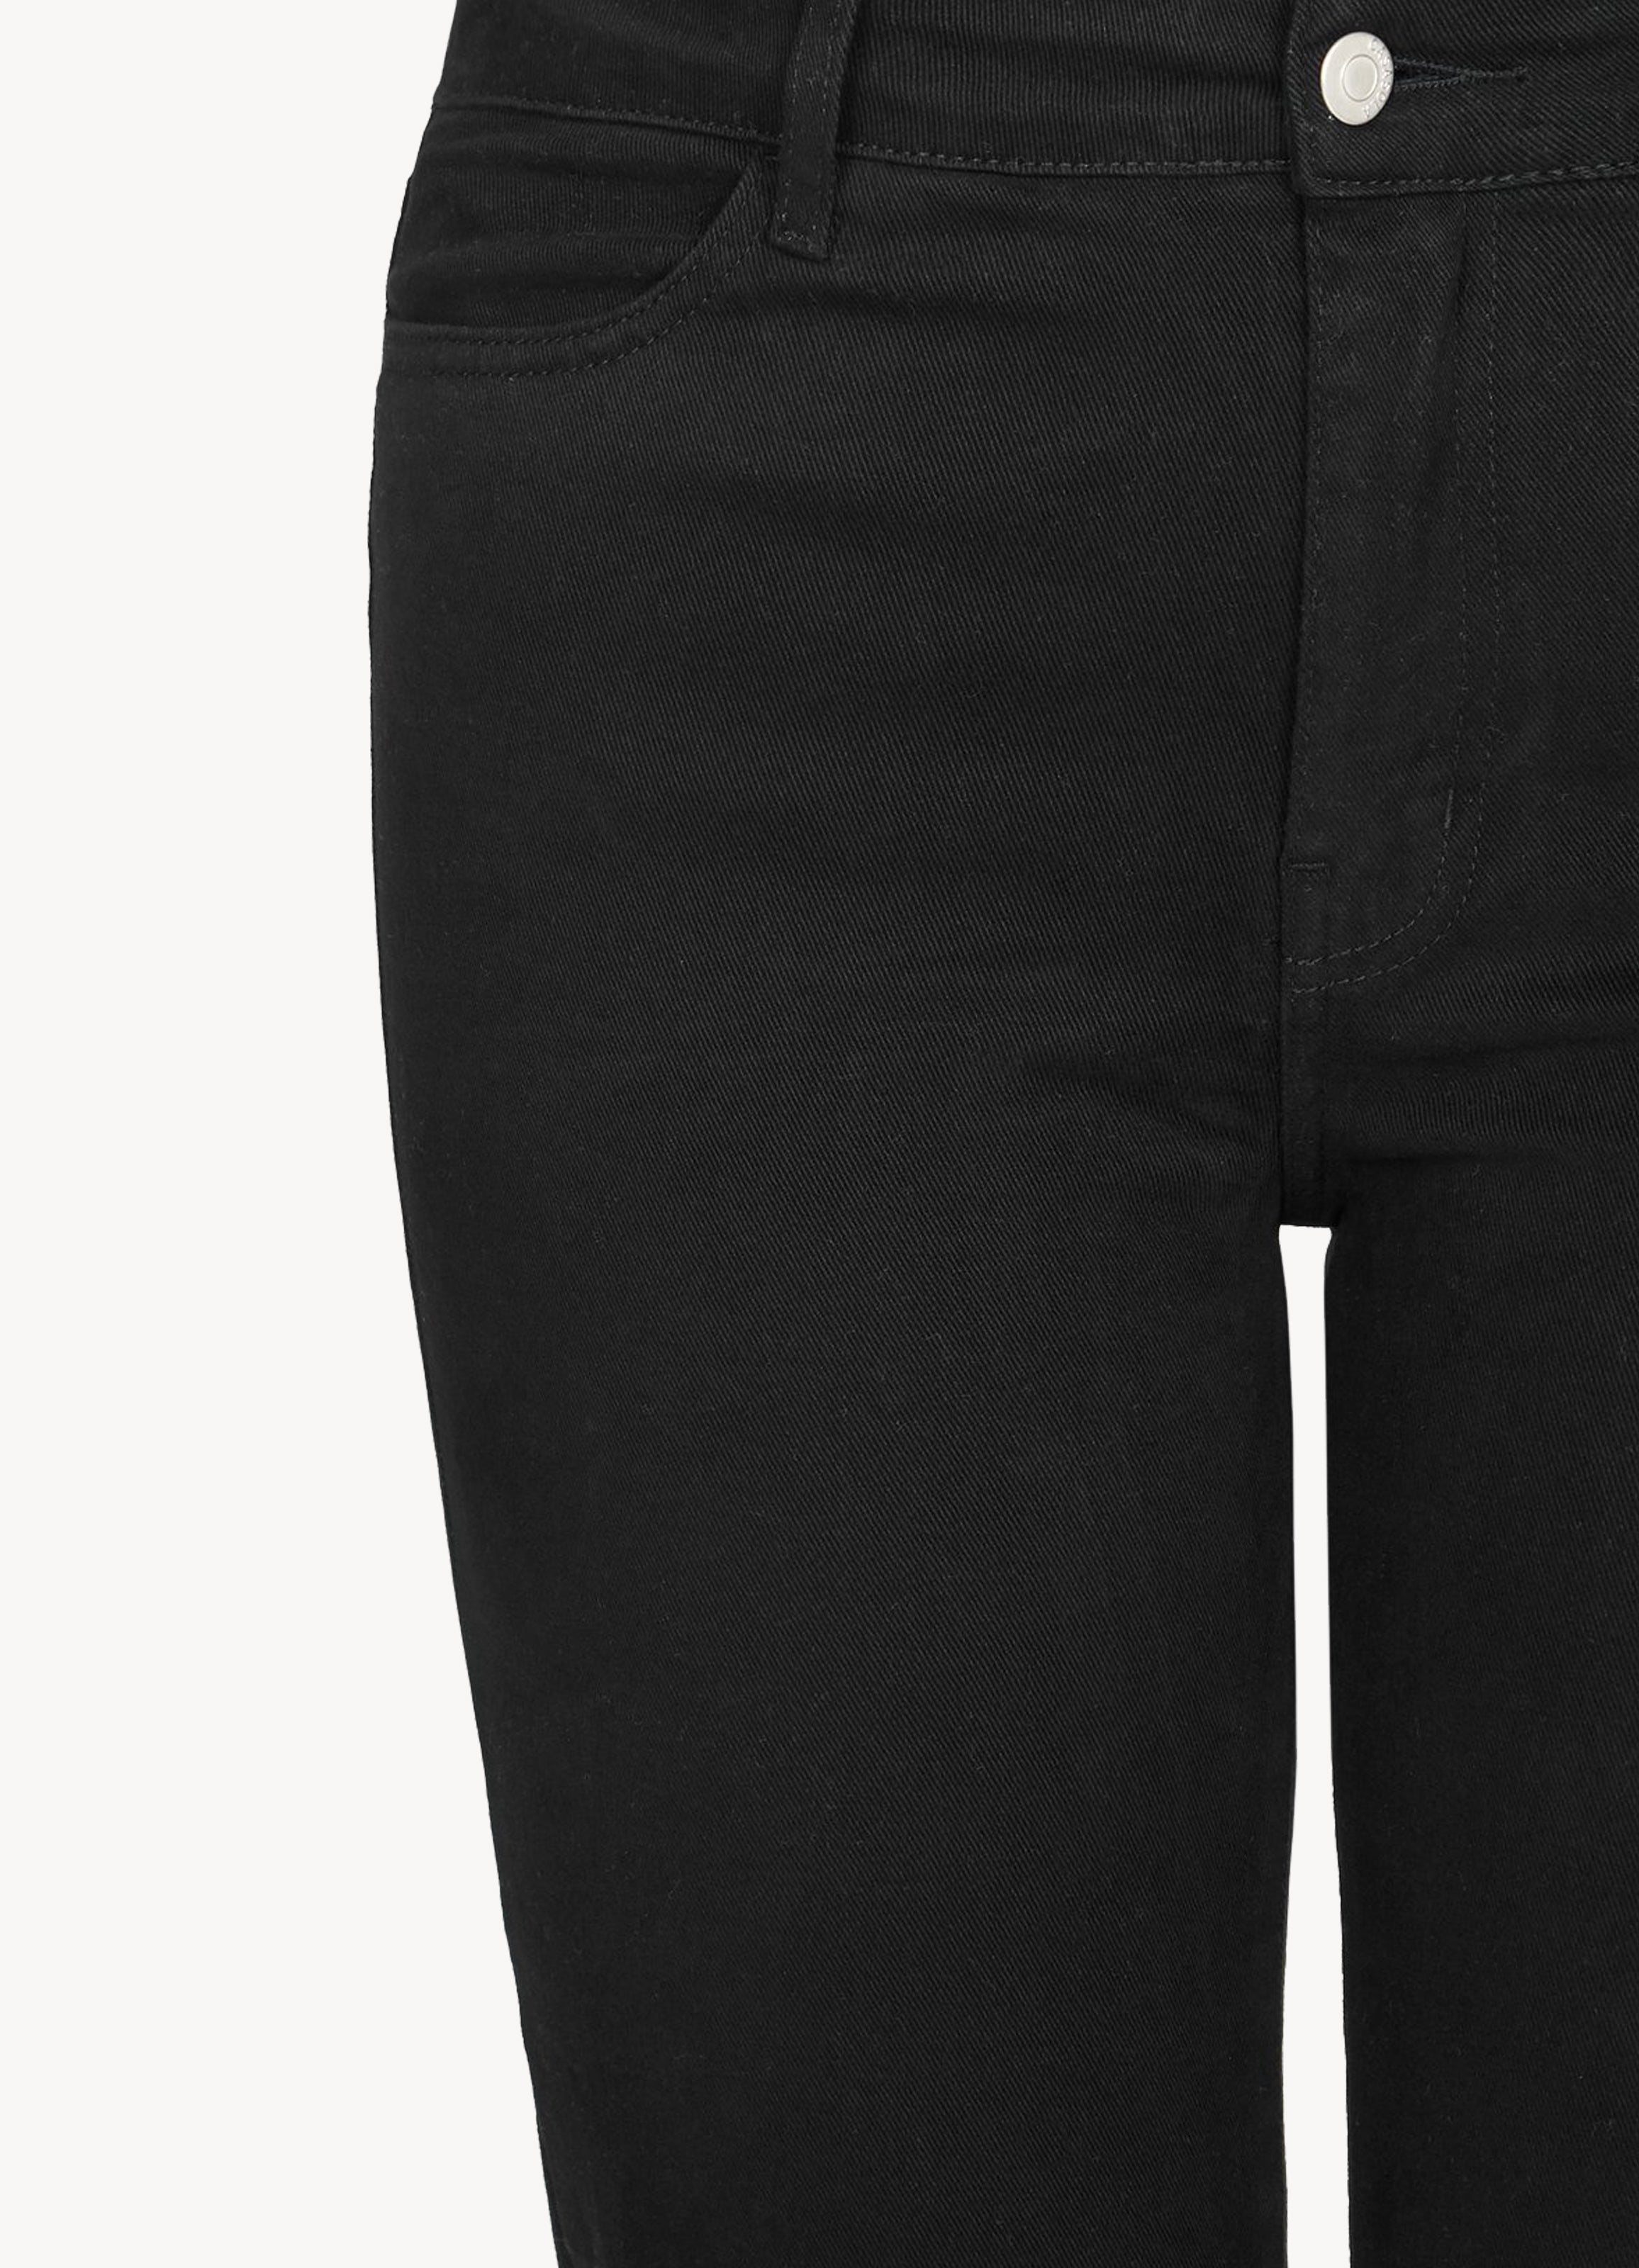 BC5 Black High-Waist Slim Cropped Jeans